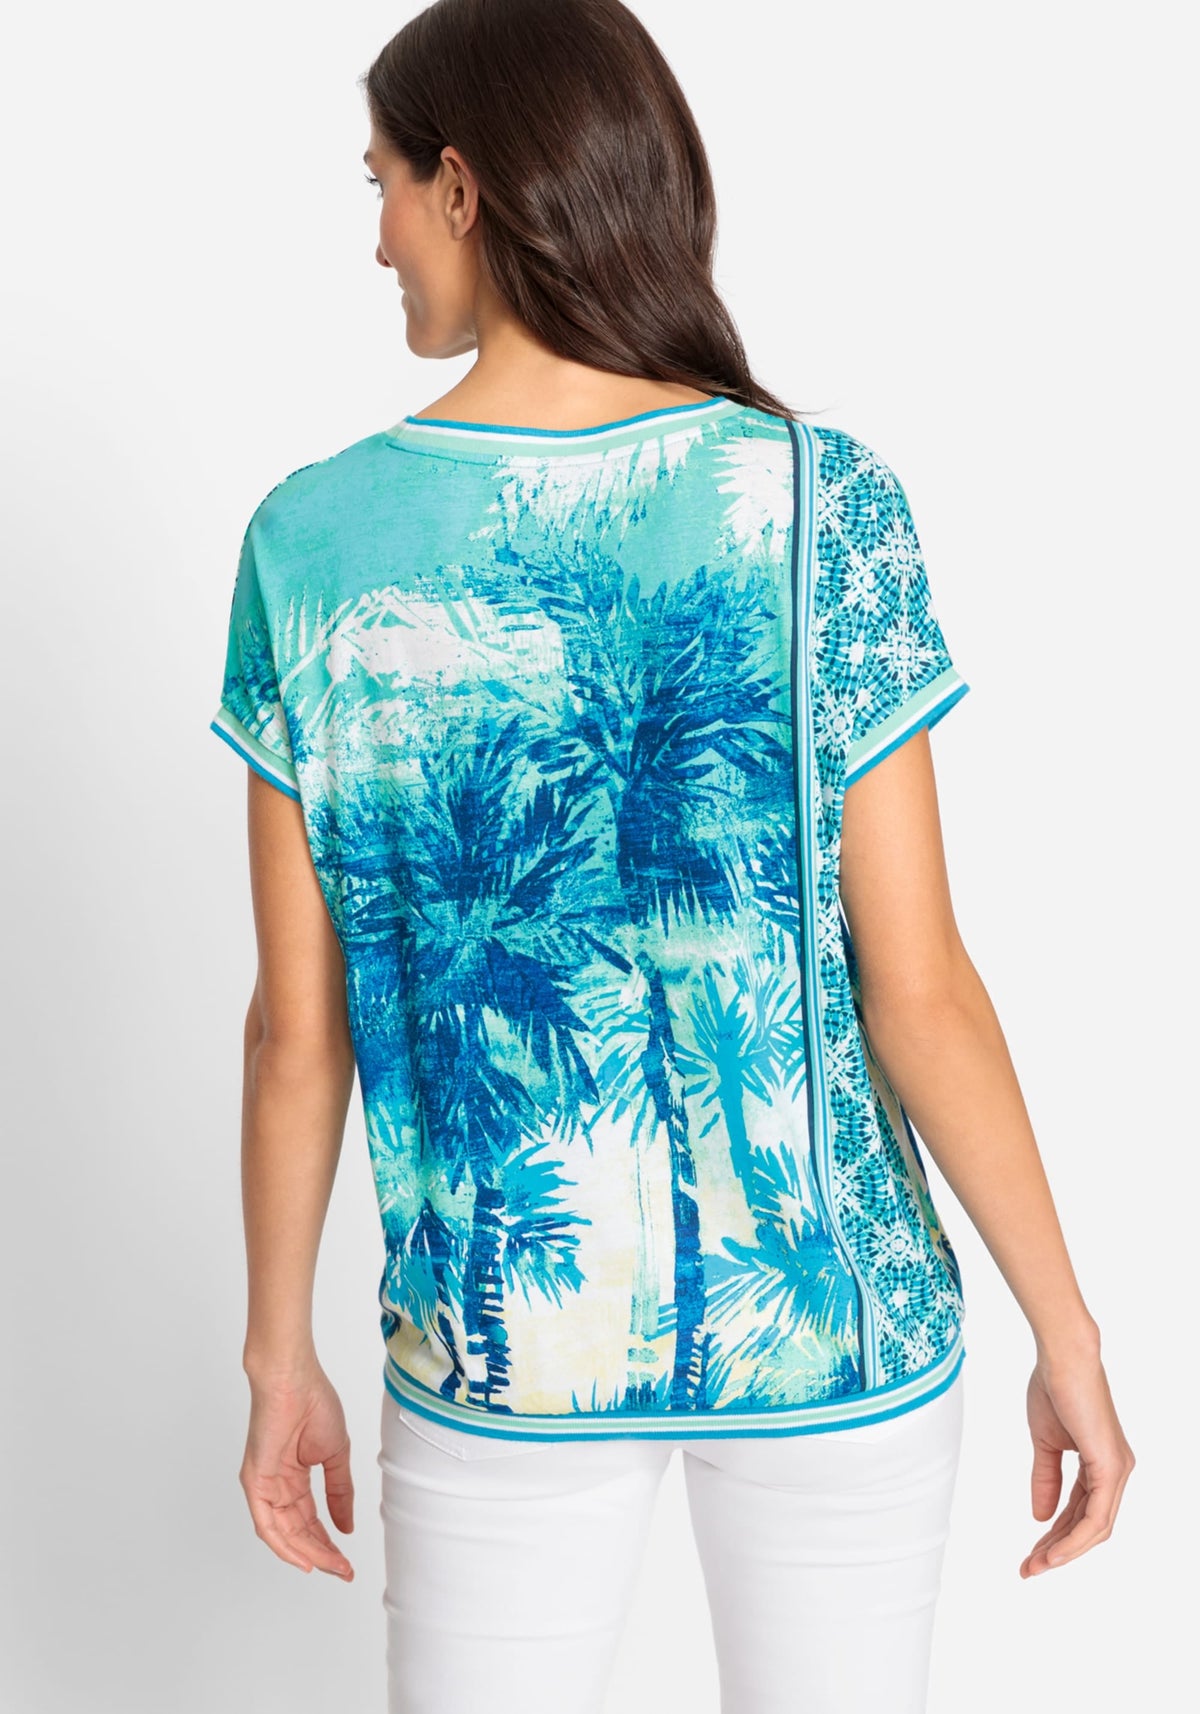 Cotton Blend Short Sleeve Boat Neck Multi Print T-Shirt containing TENCEL™ Modal